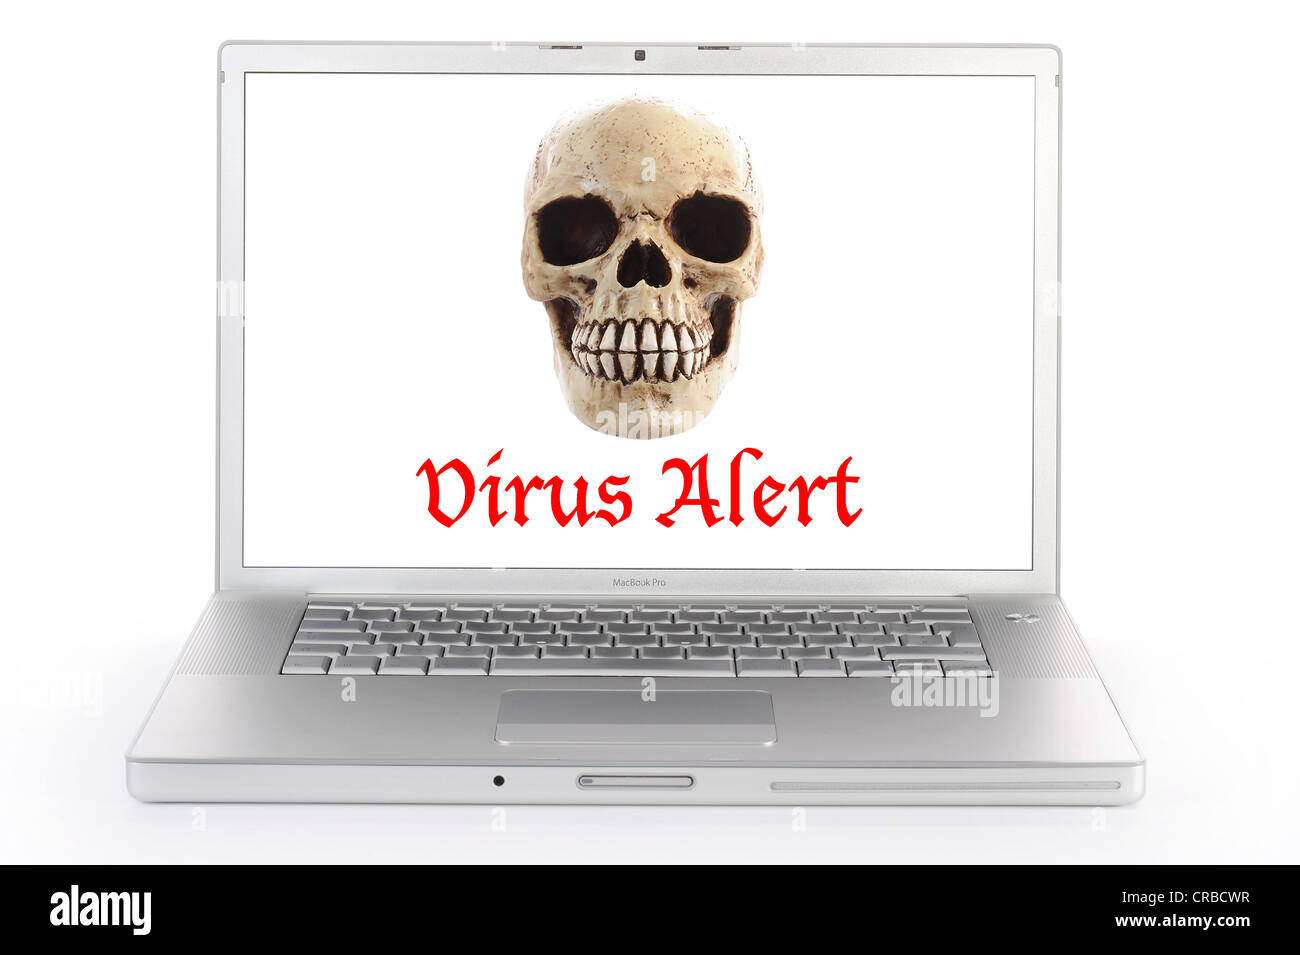 Laptop-Computer, Schädel, Schriftzug "Virus Alert", symbolisches Bild Stockfoto